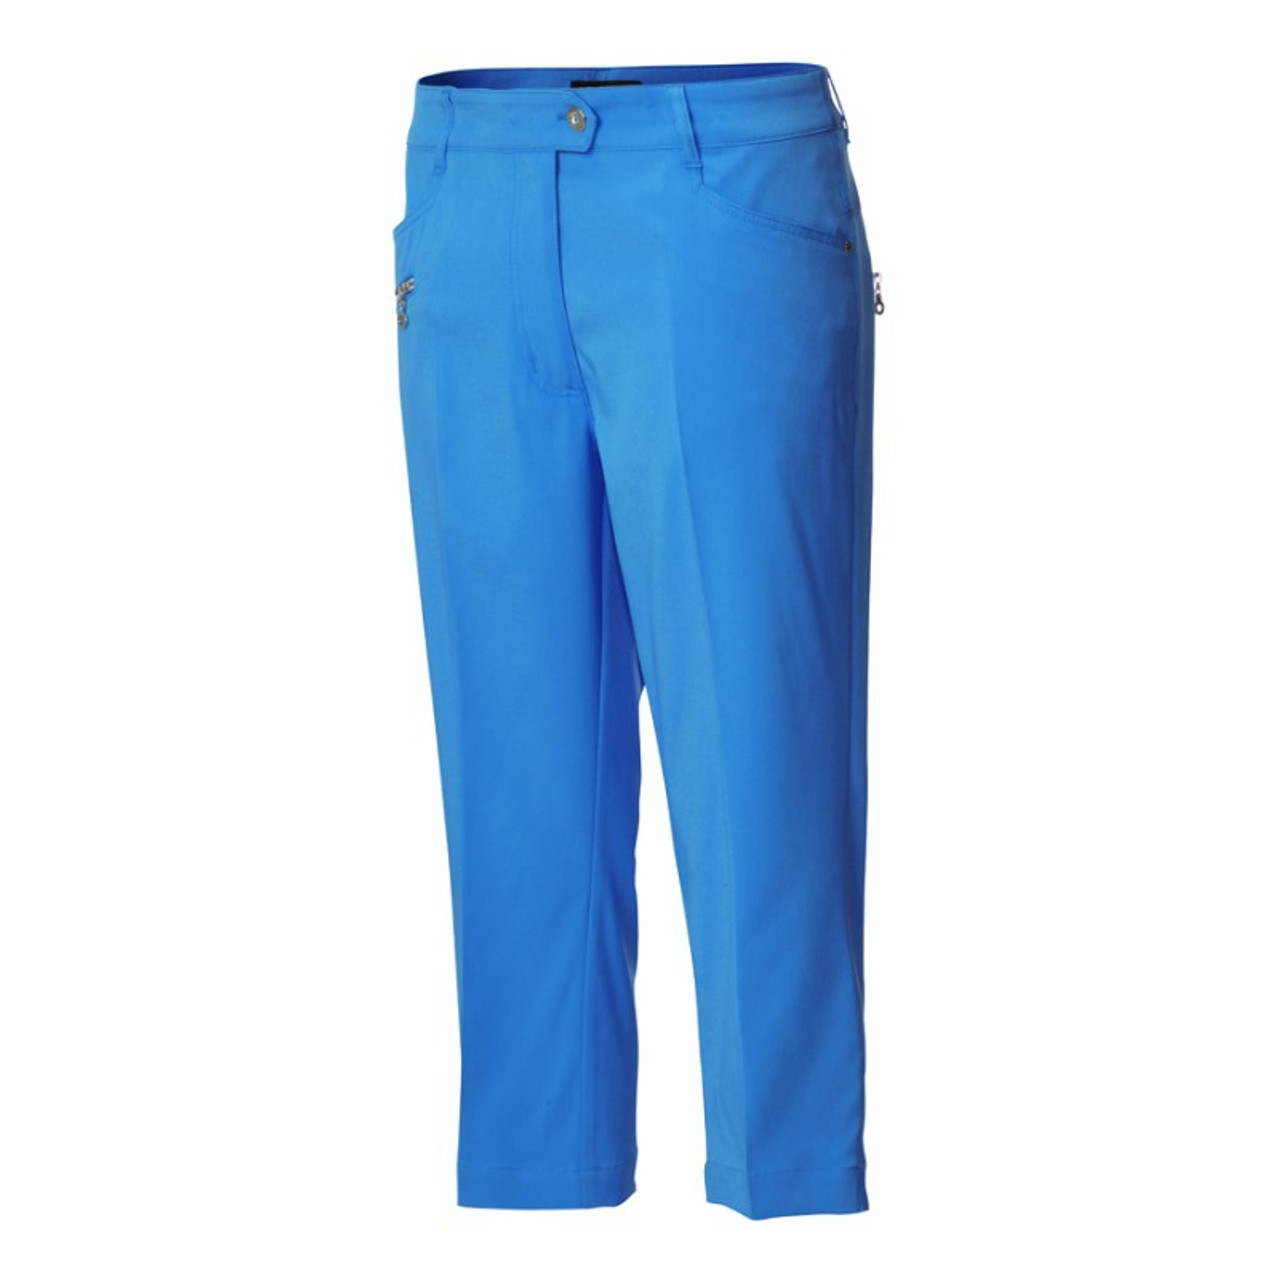 JRB Ladies CAPRI CROPPED Golf Trousers Azure Blue + FREE Socks